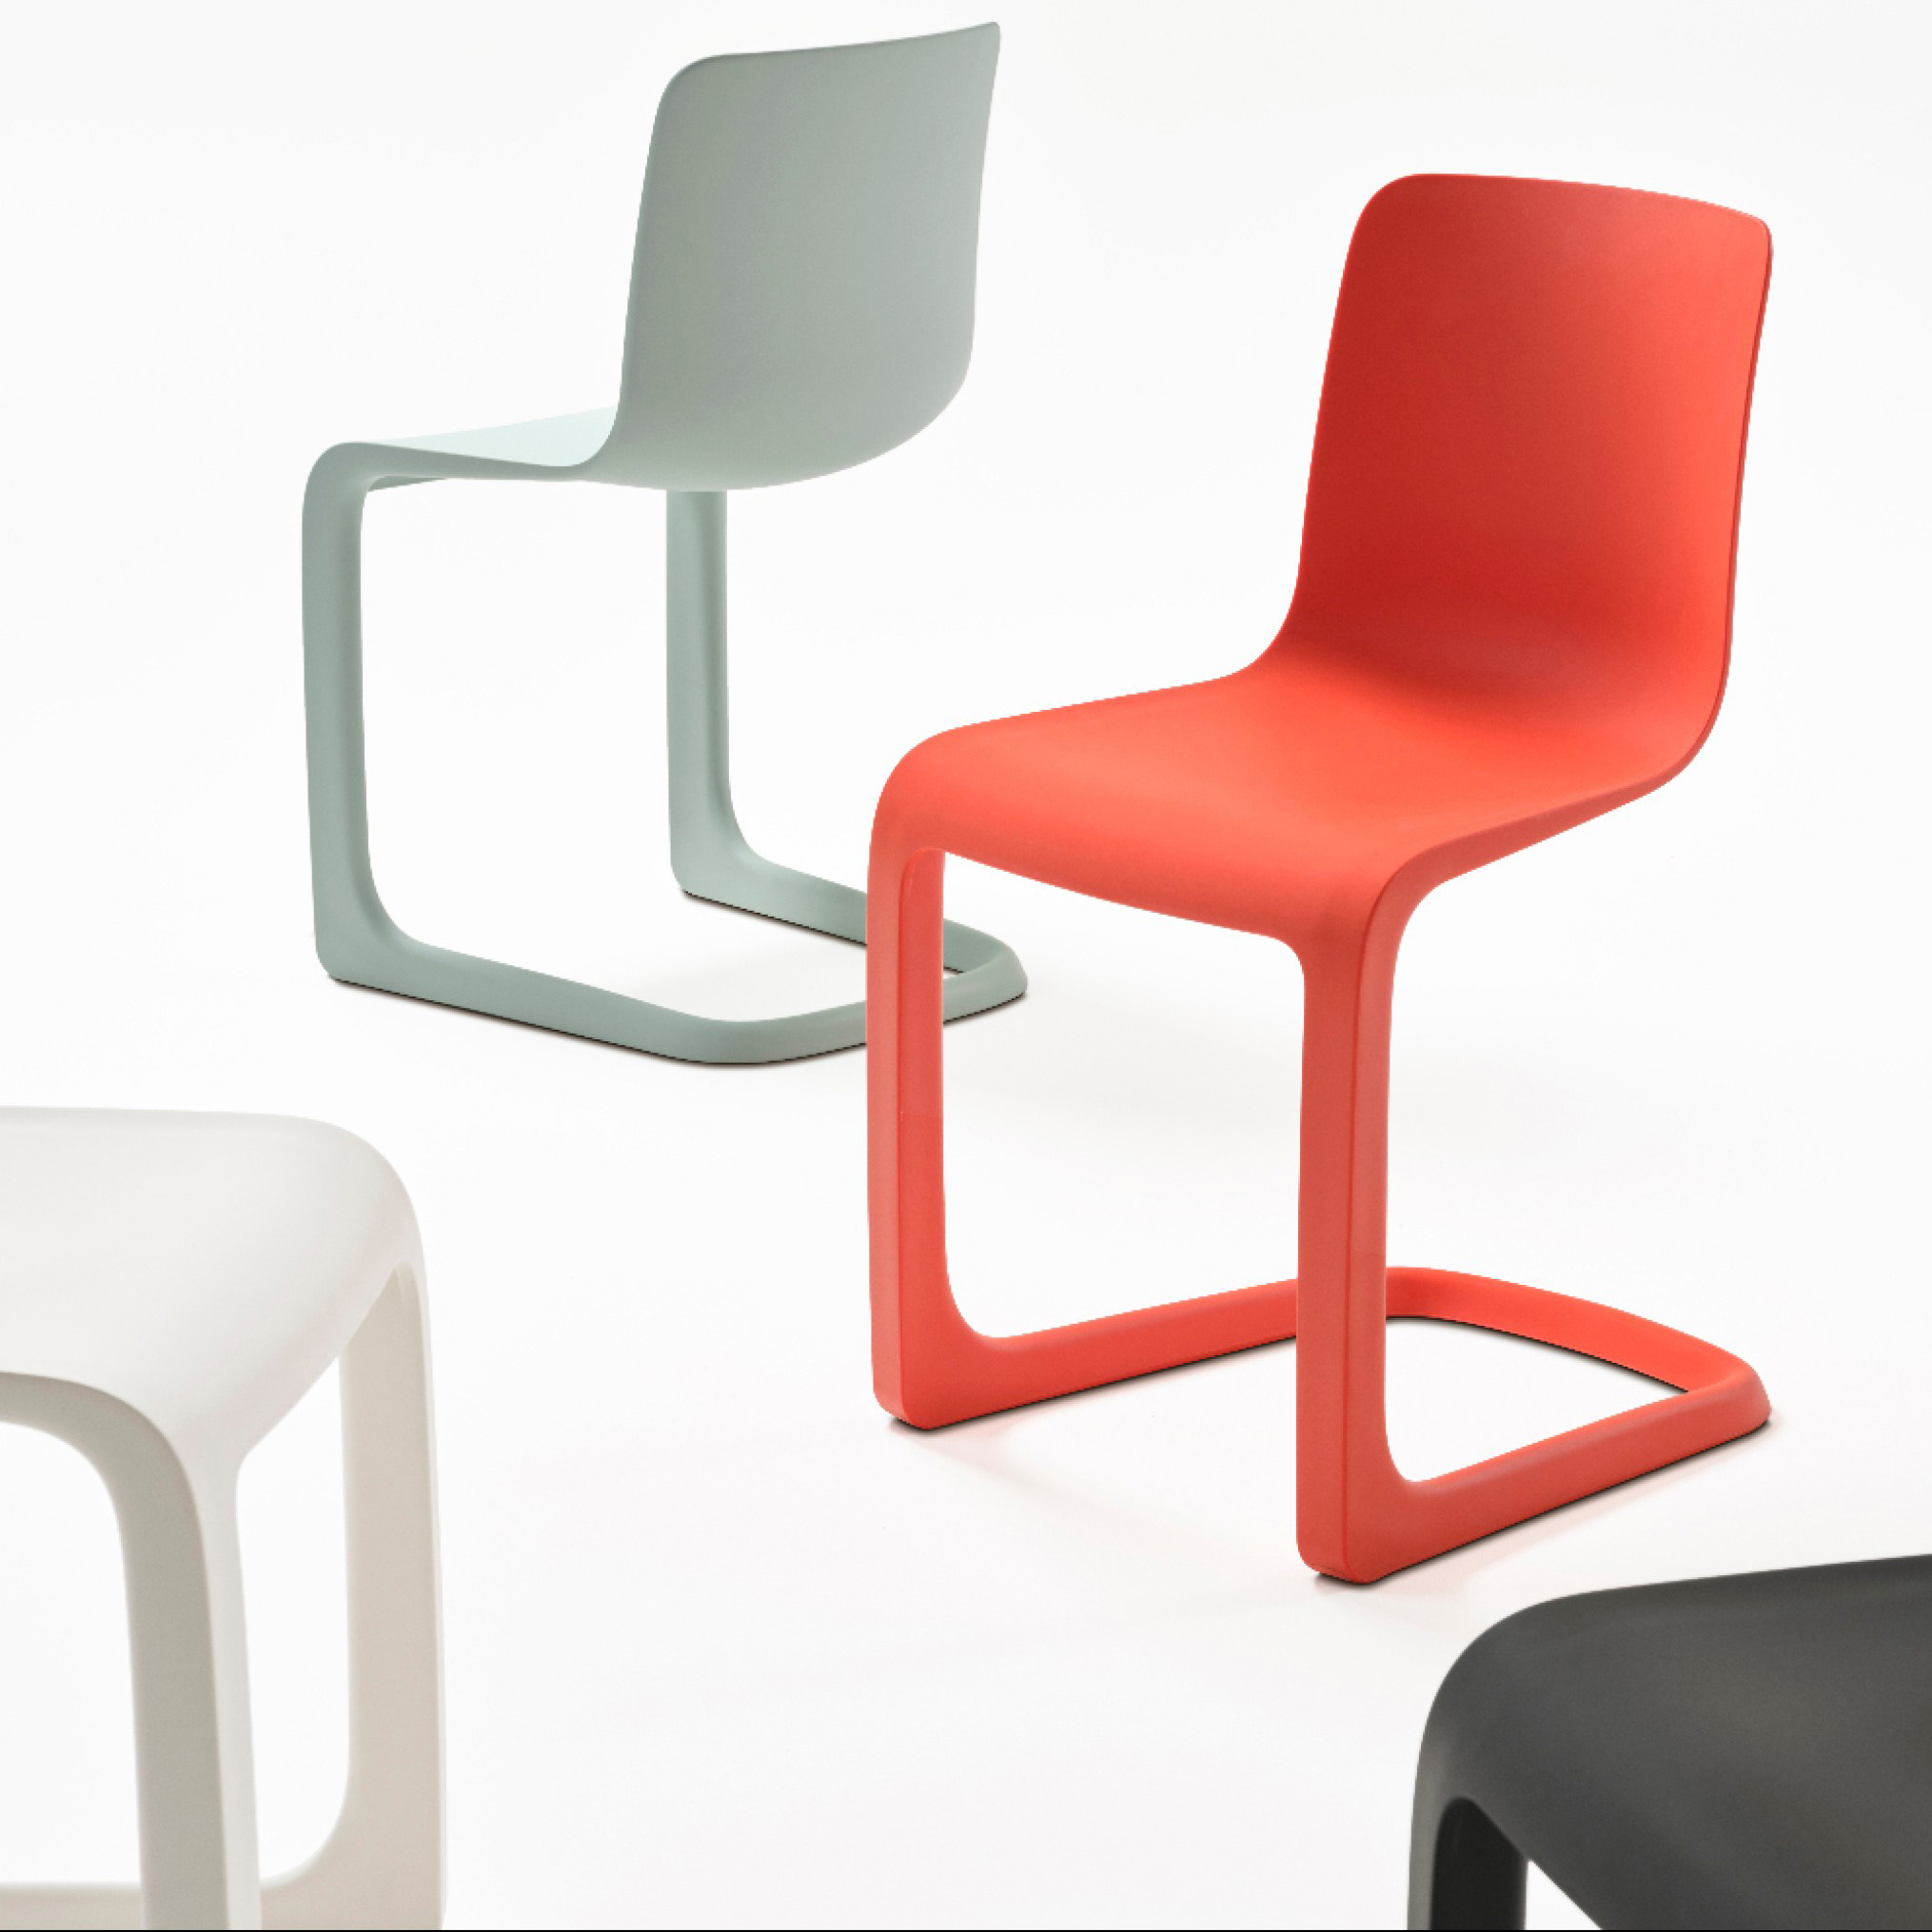 Evo-C chair by Jasper Morrison for Vitra